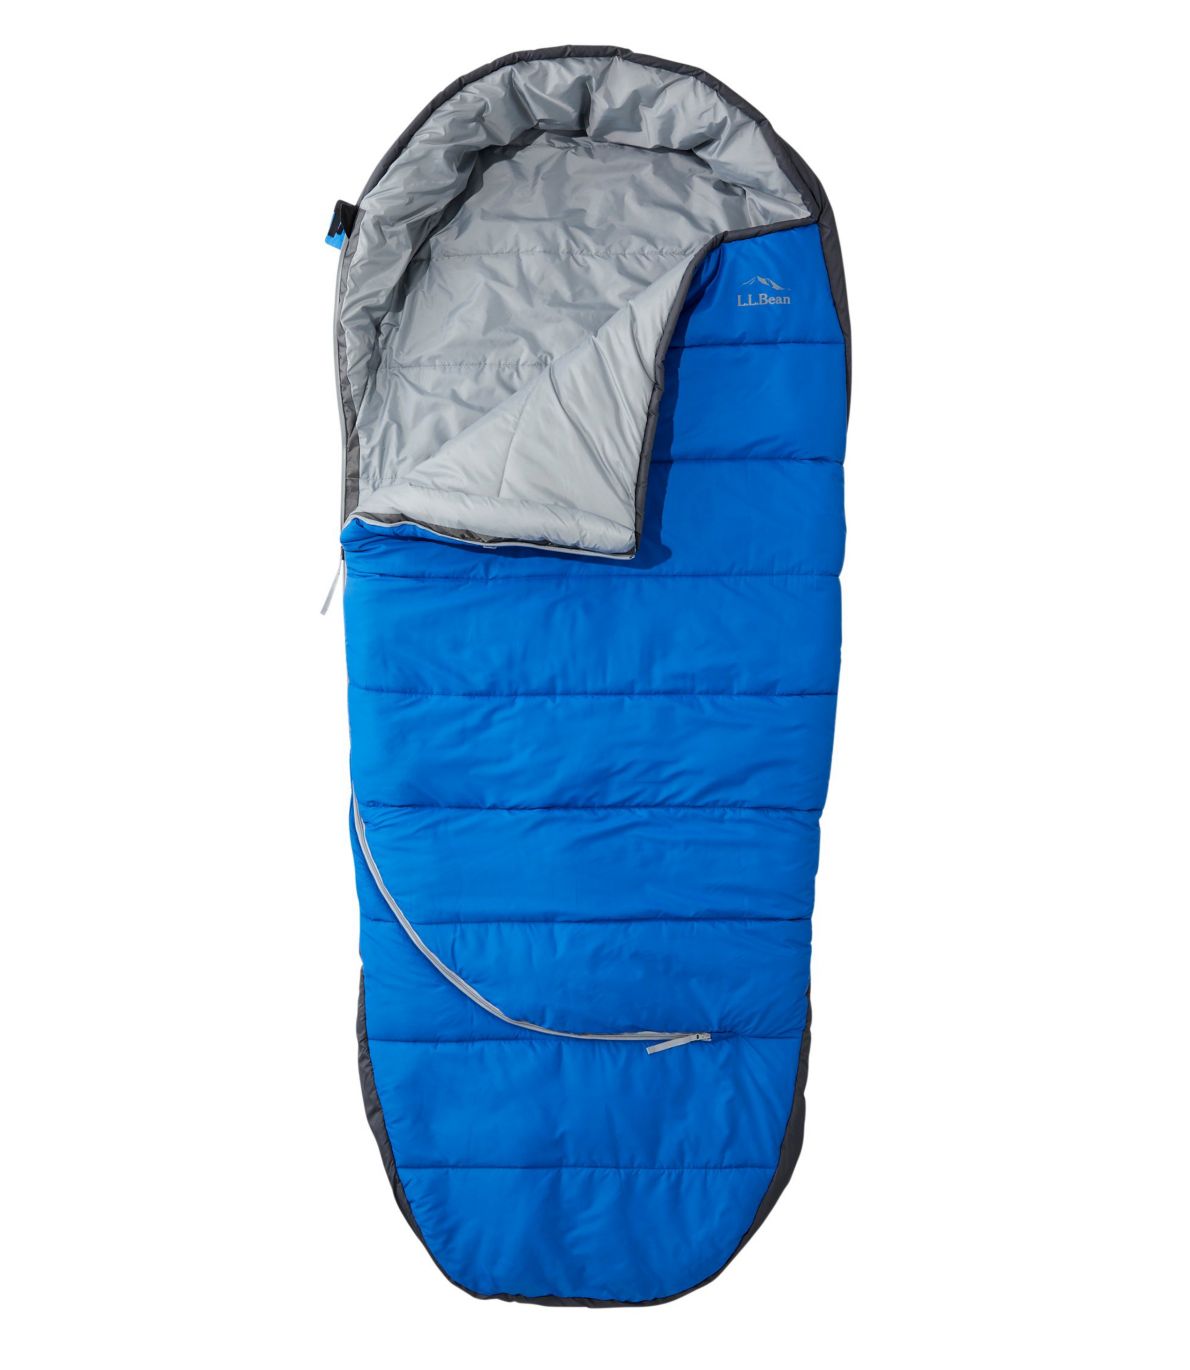 L.L.Bean Adventure Sleeping Bag, 30°